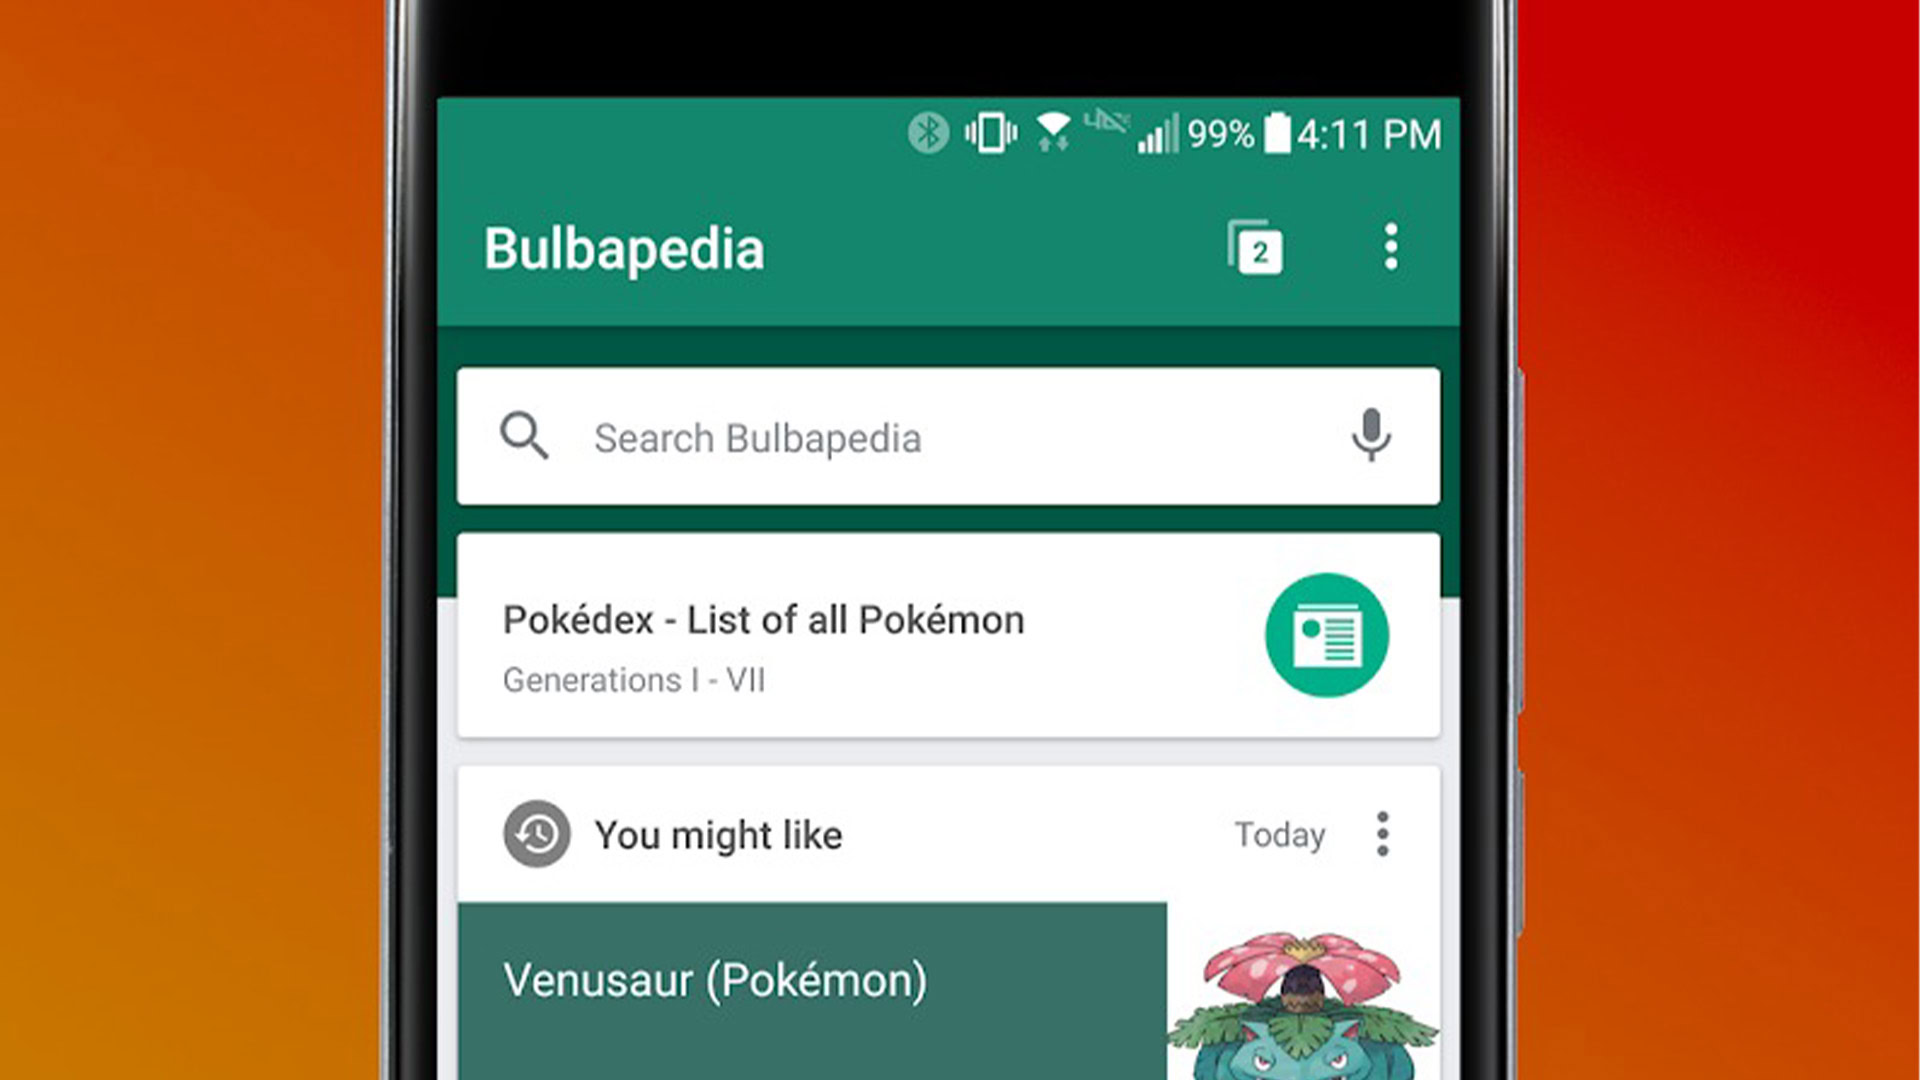 Bulbapedia APK (Android App) - Free Download